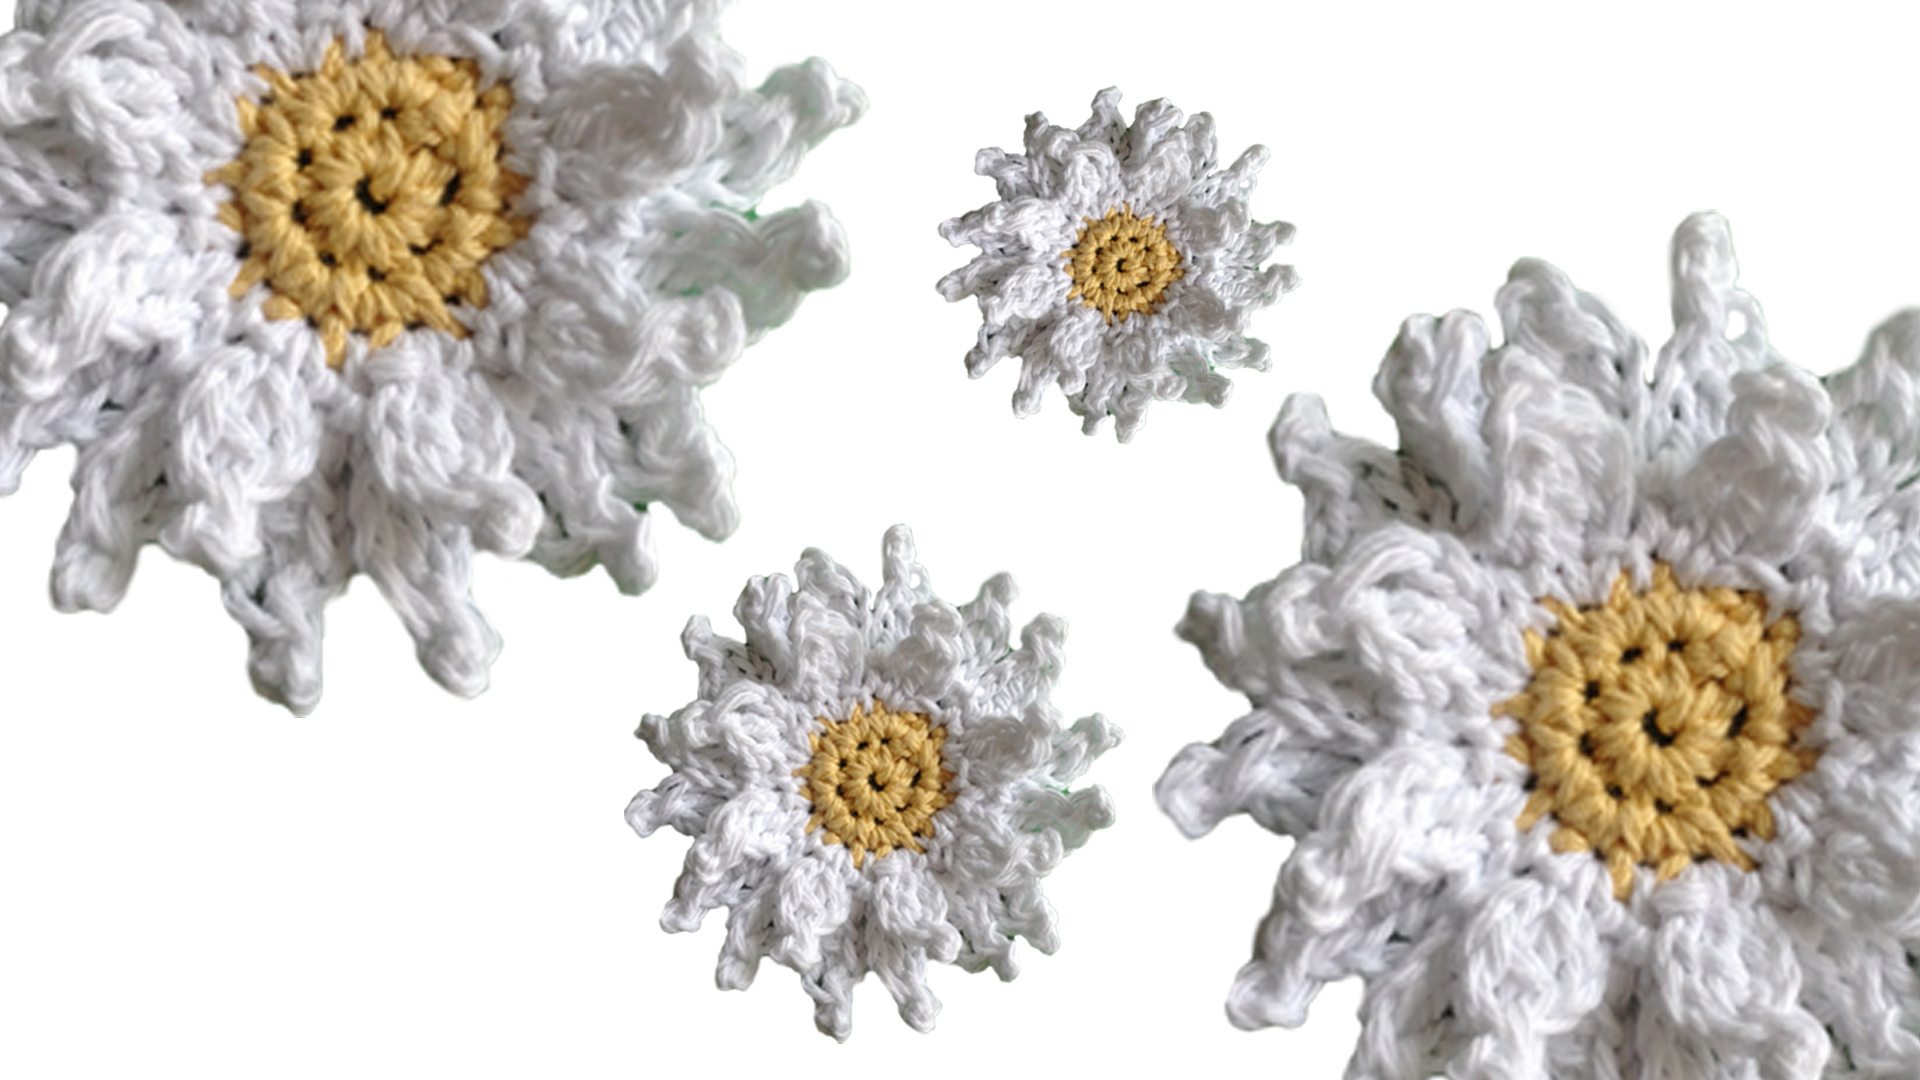 maggies-crochet-giant-daisy-free-pattern-close-up